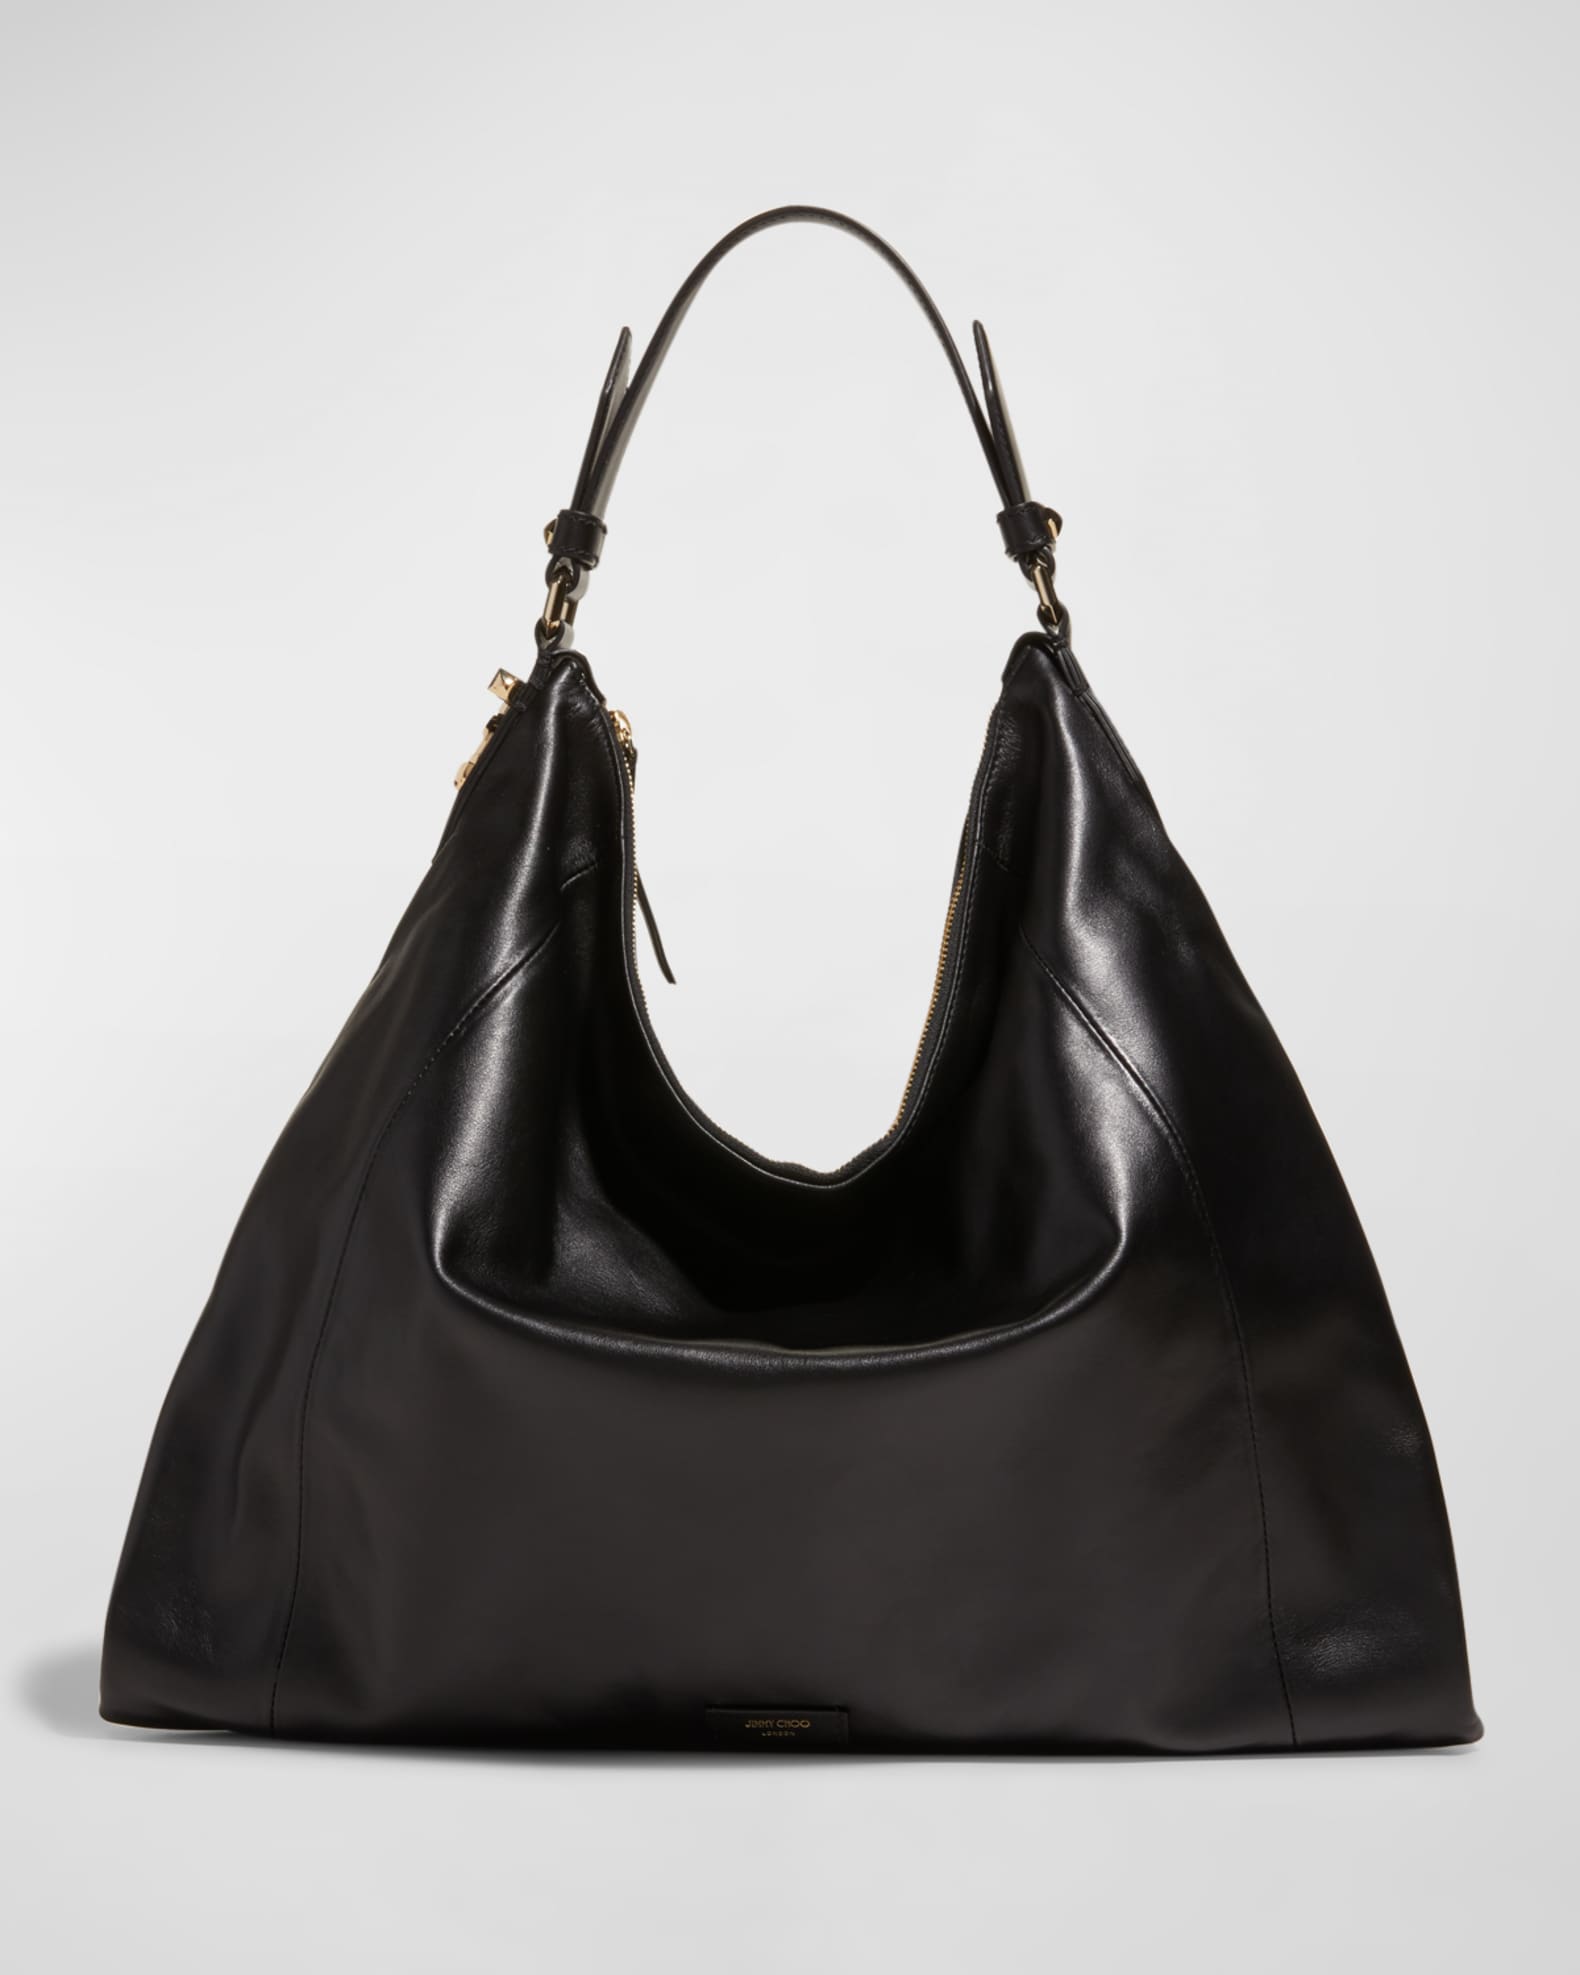 Buy JIMMY CHOO Women Black Shoulder Bag Golden Online @ Best Price